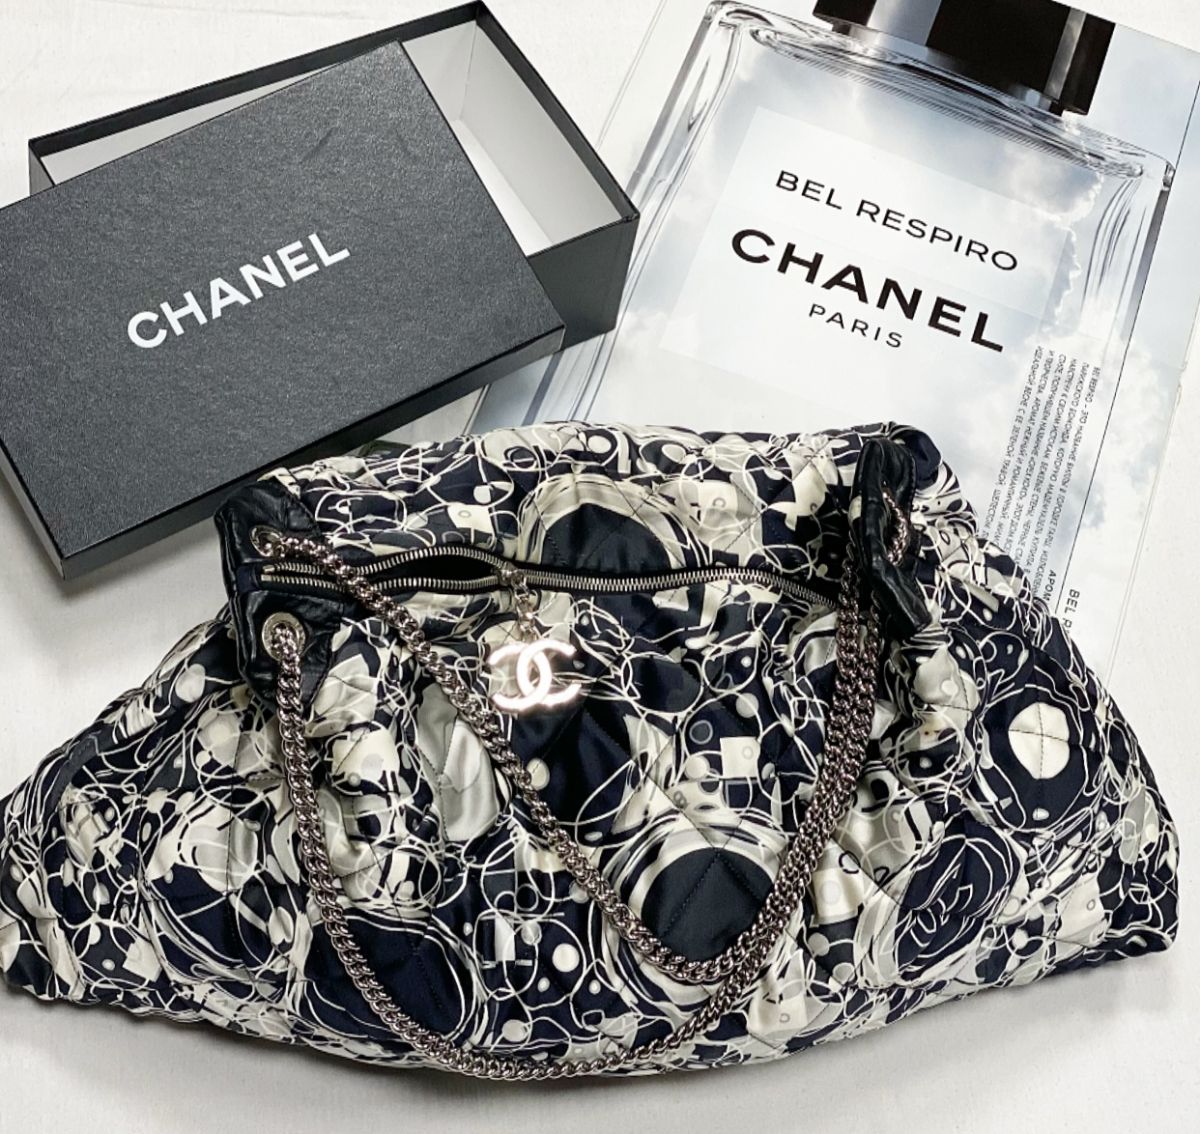 Сумка Chanel размер 50/30 цена 92 310 руб 